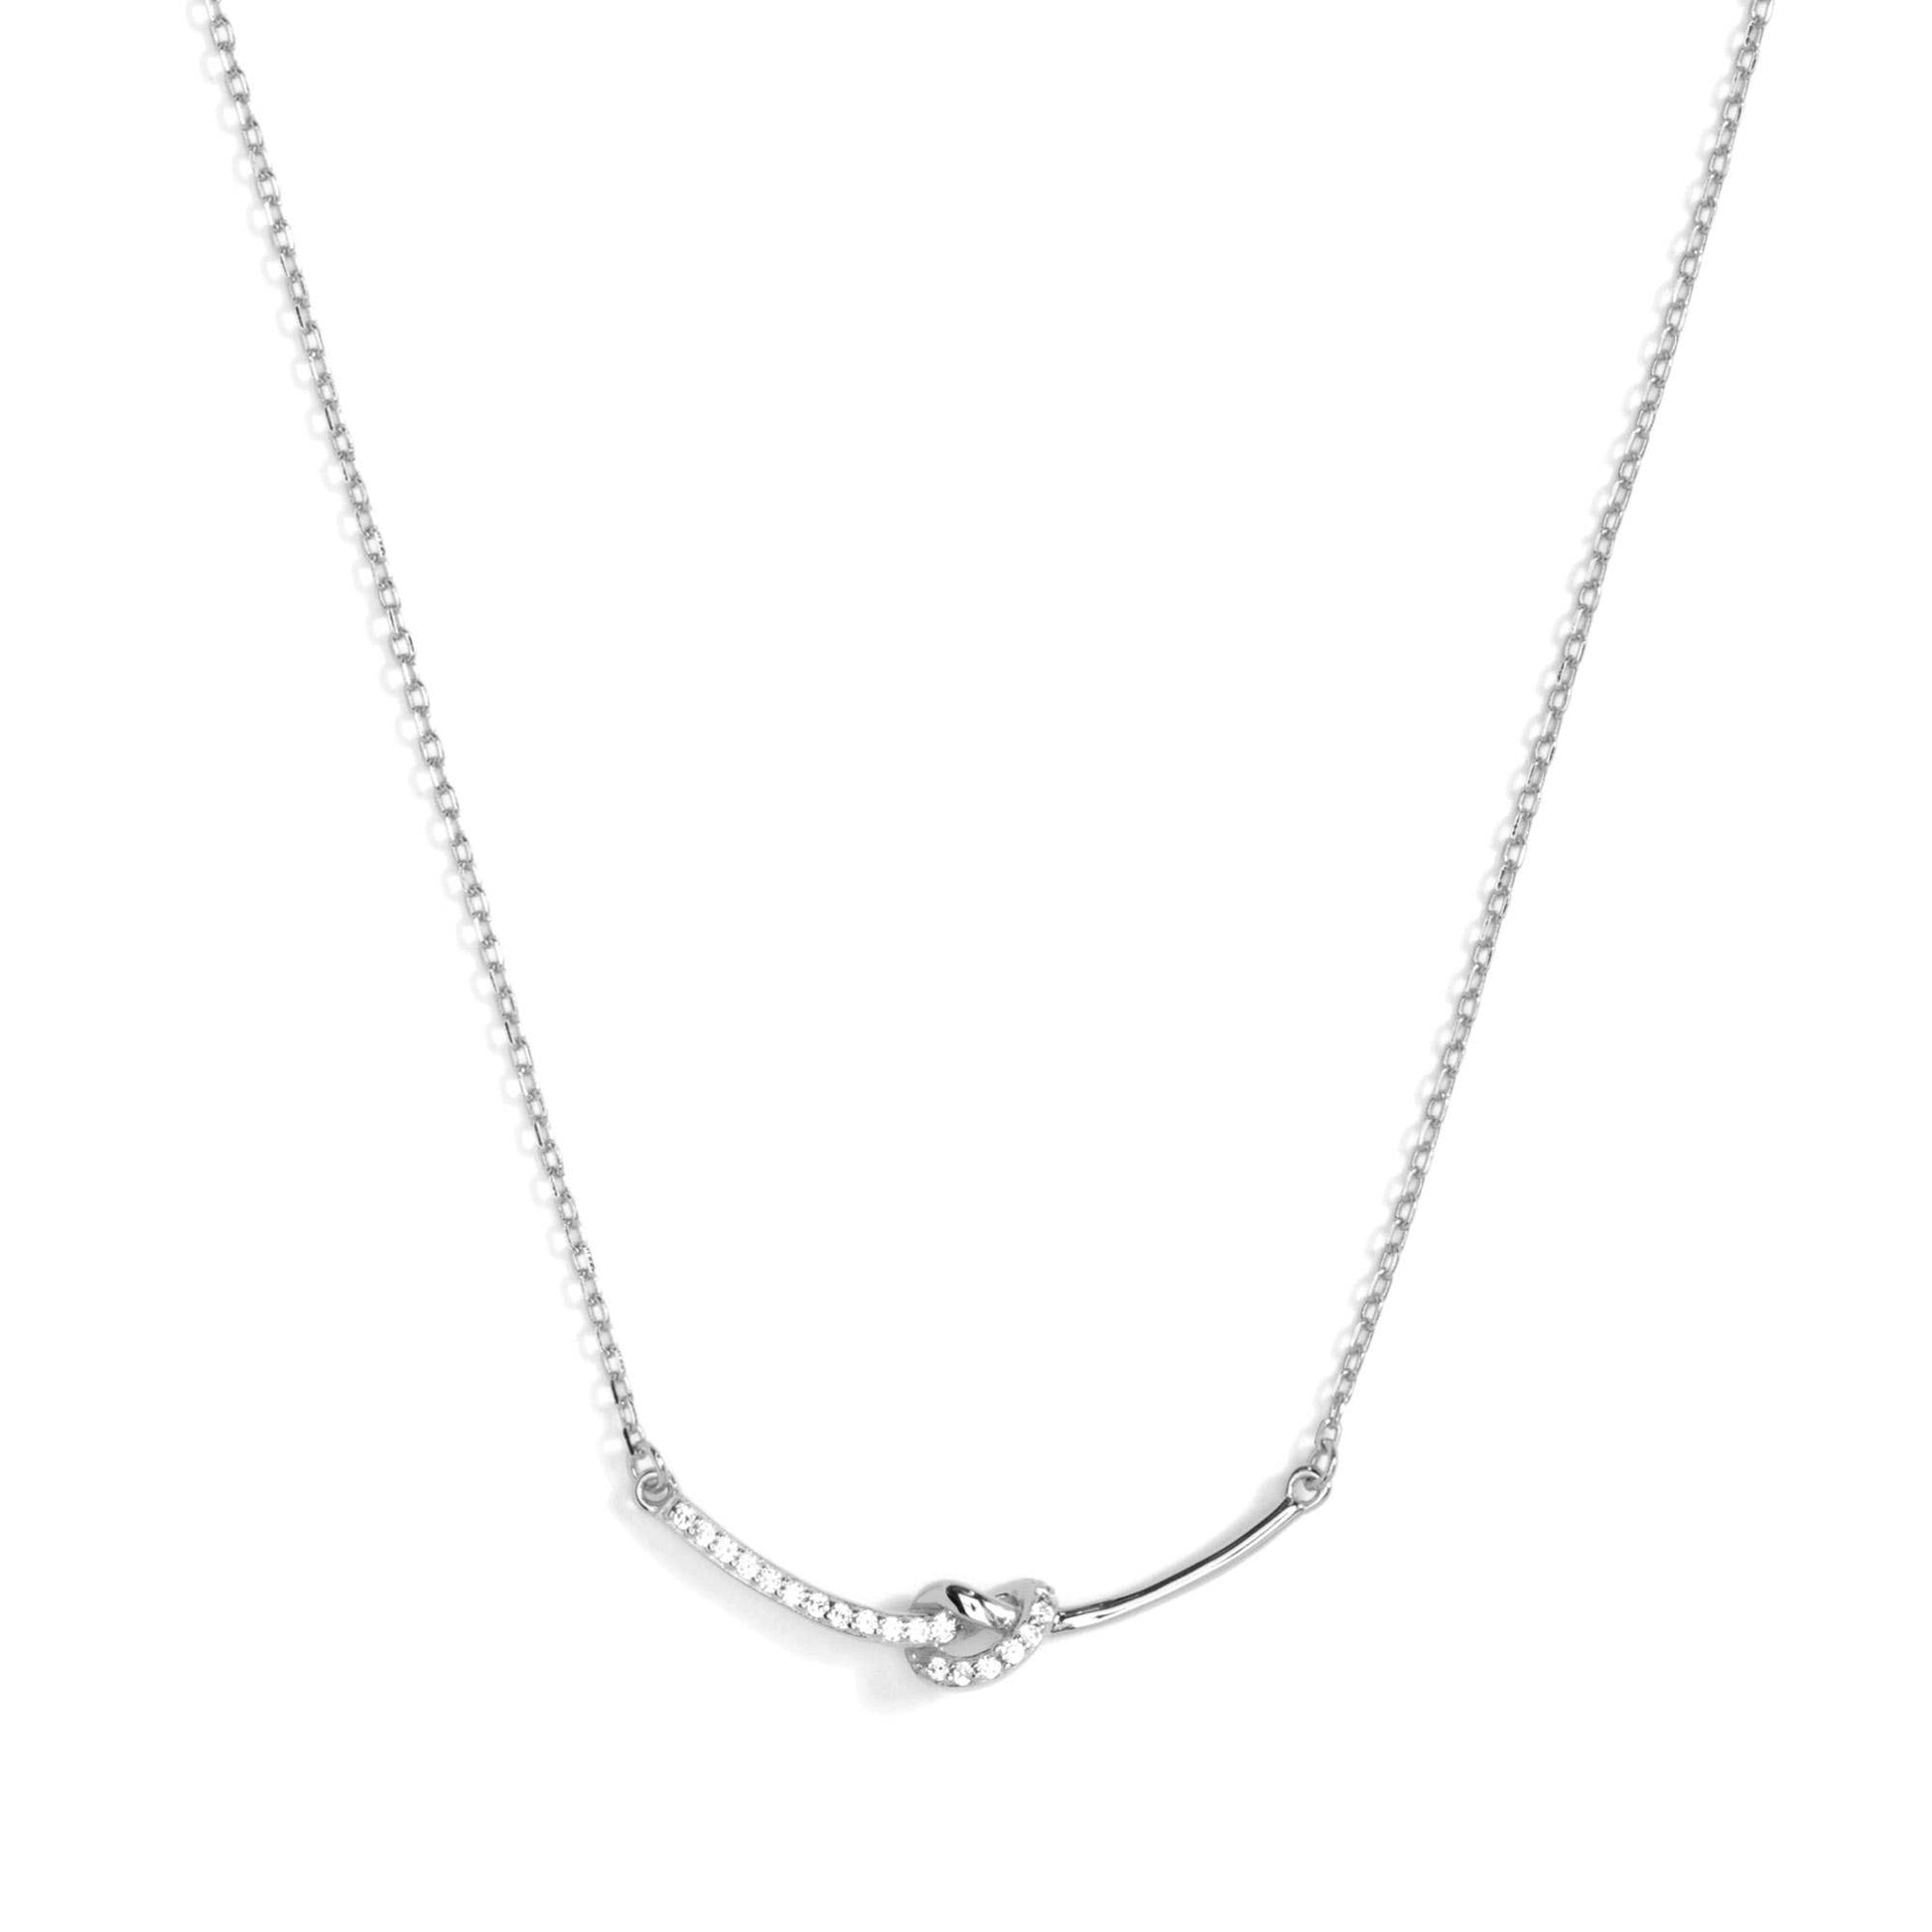 Silver Pave Knot Necklace Core Splendid Iris